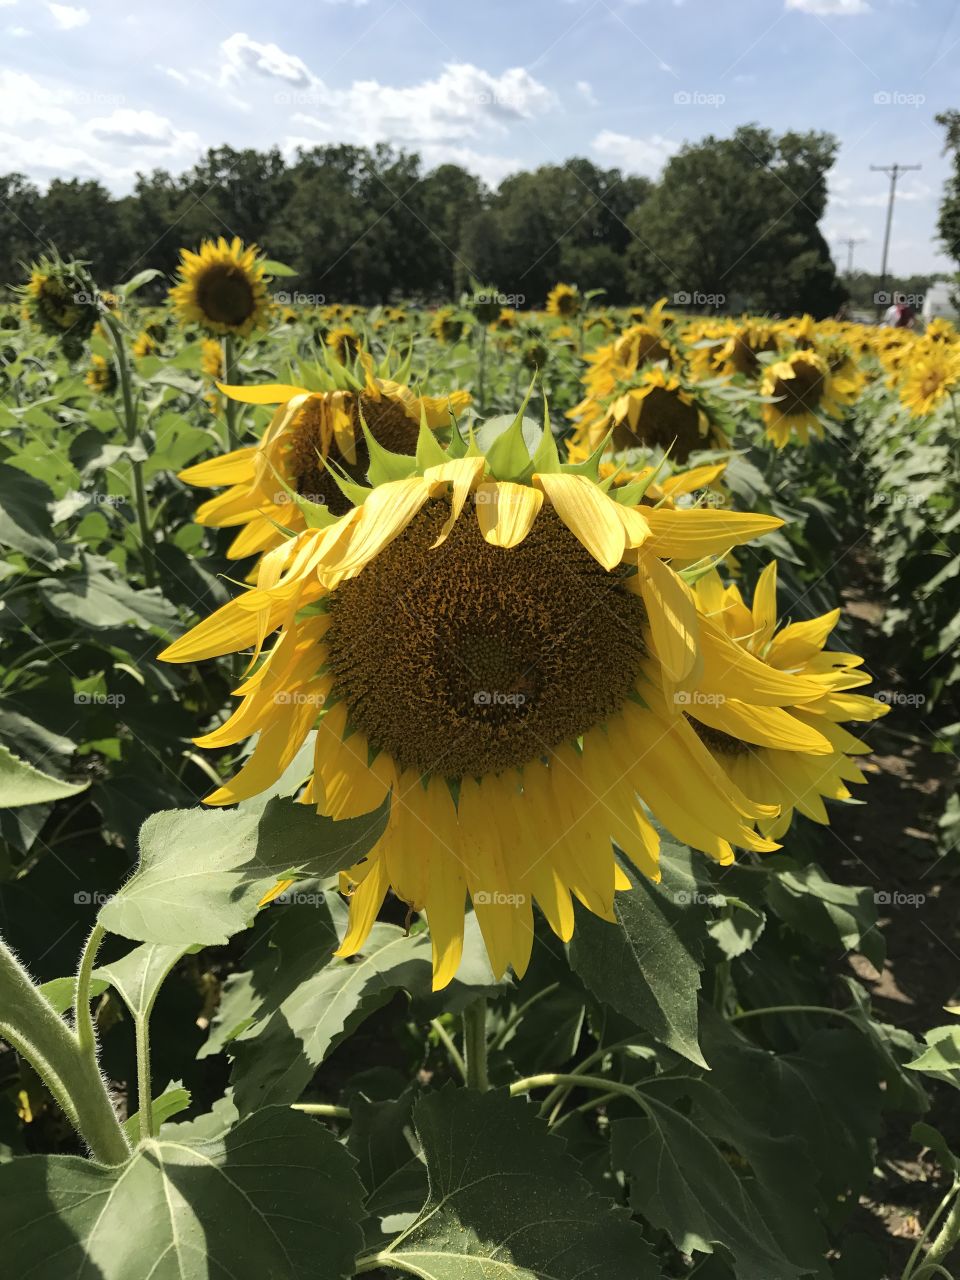 Tecumseh Land Trust sunflower field in Ohio   